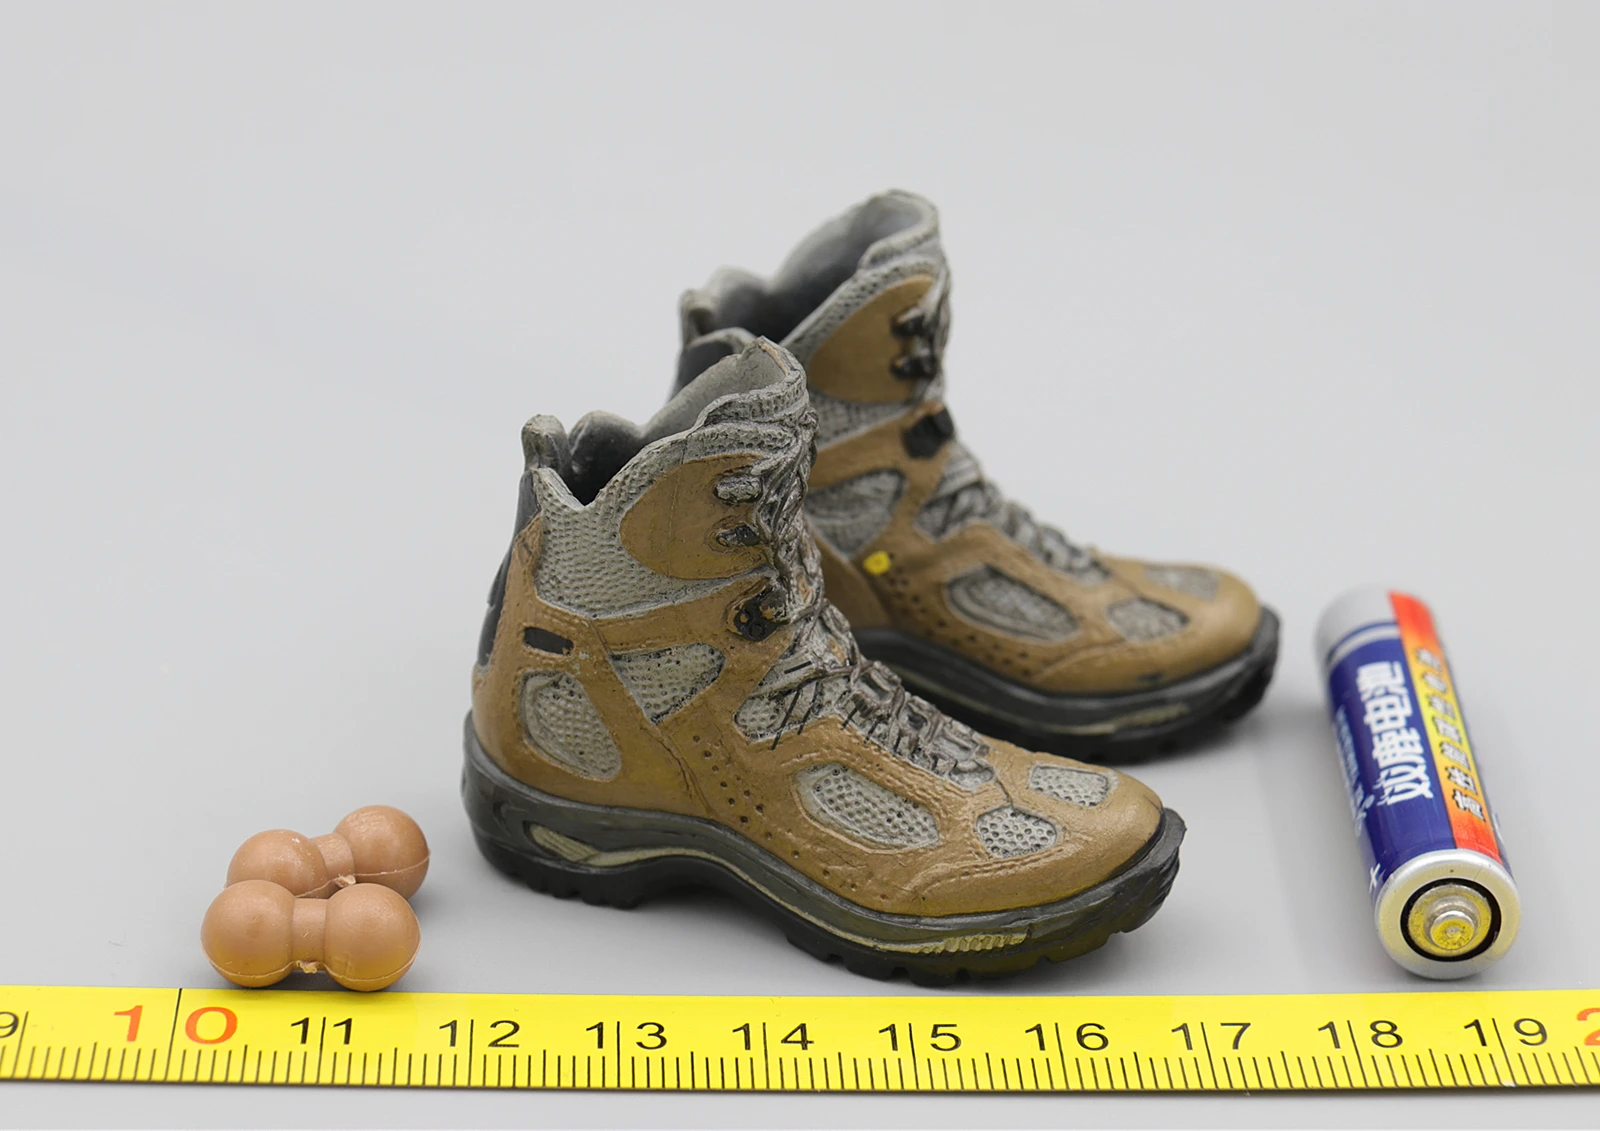 

Модель однотонной обуви солдатика 1/6 для 12 дюймов M042 армии США спецназа